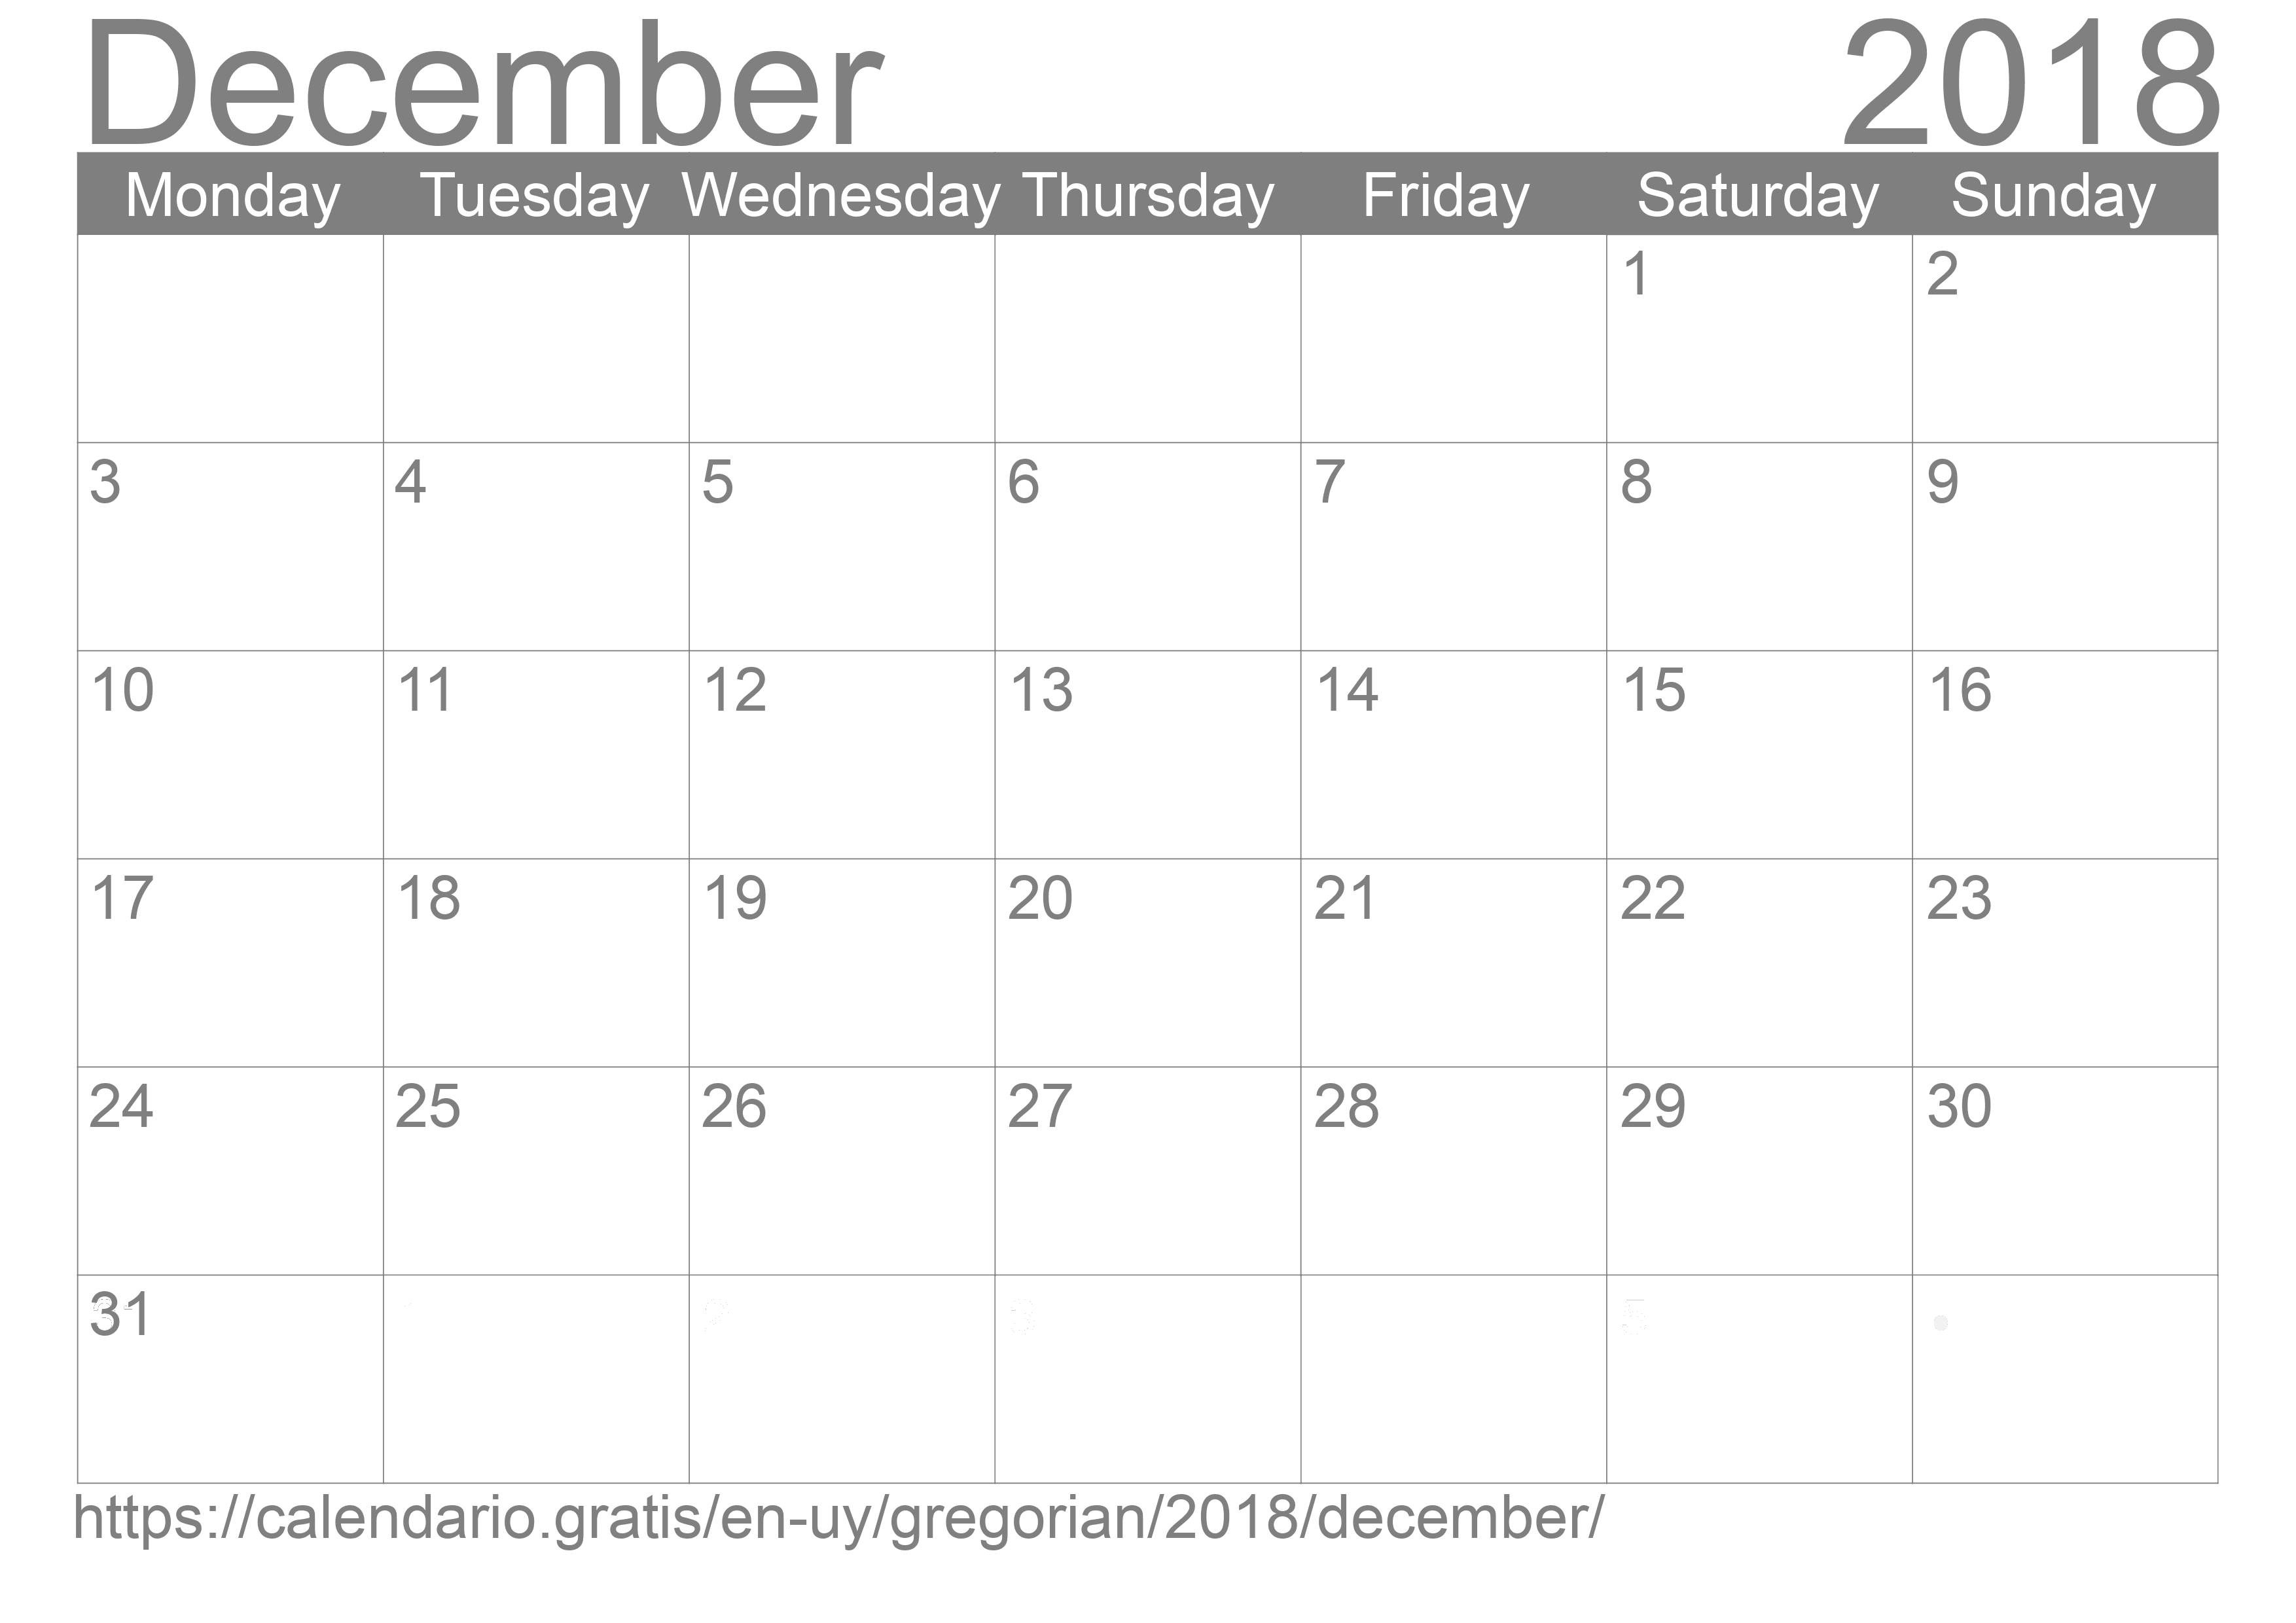 Calendar December 2018 to print